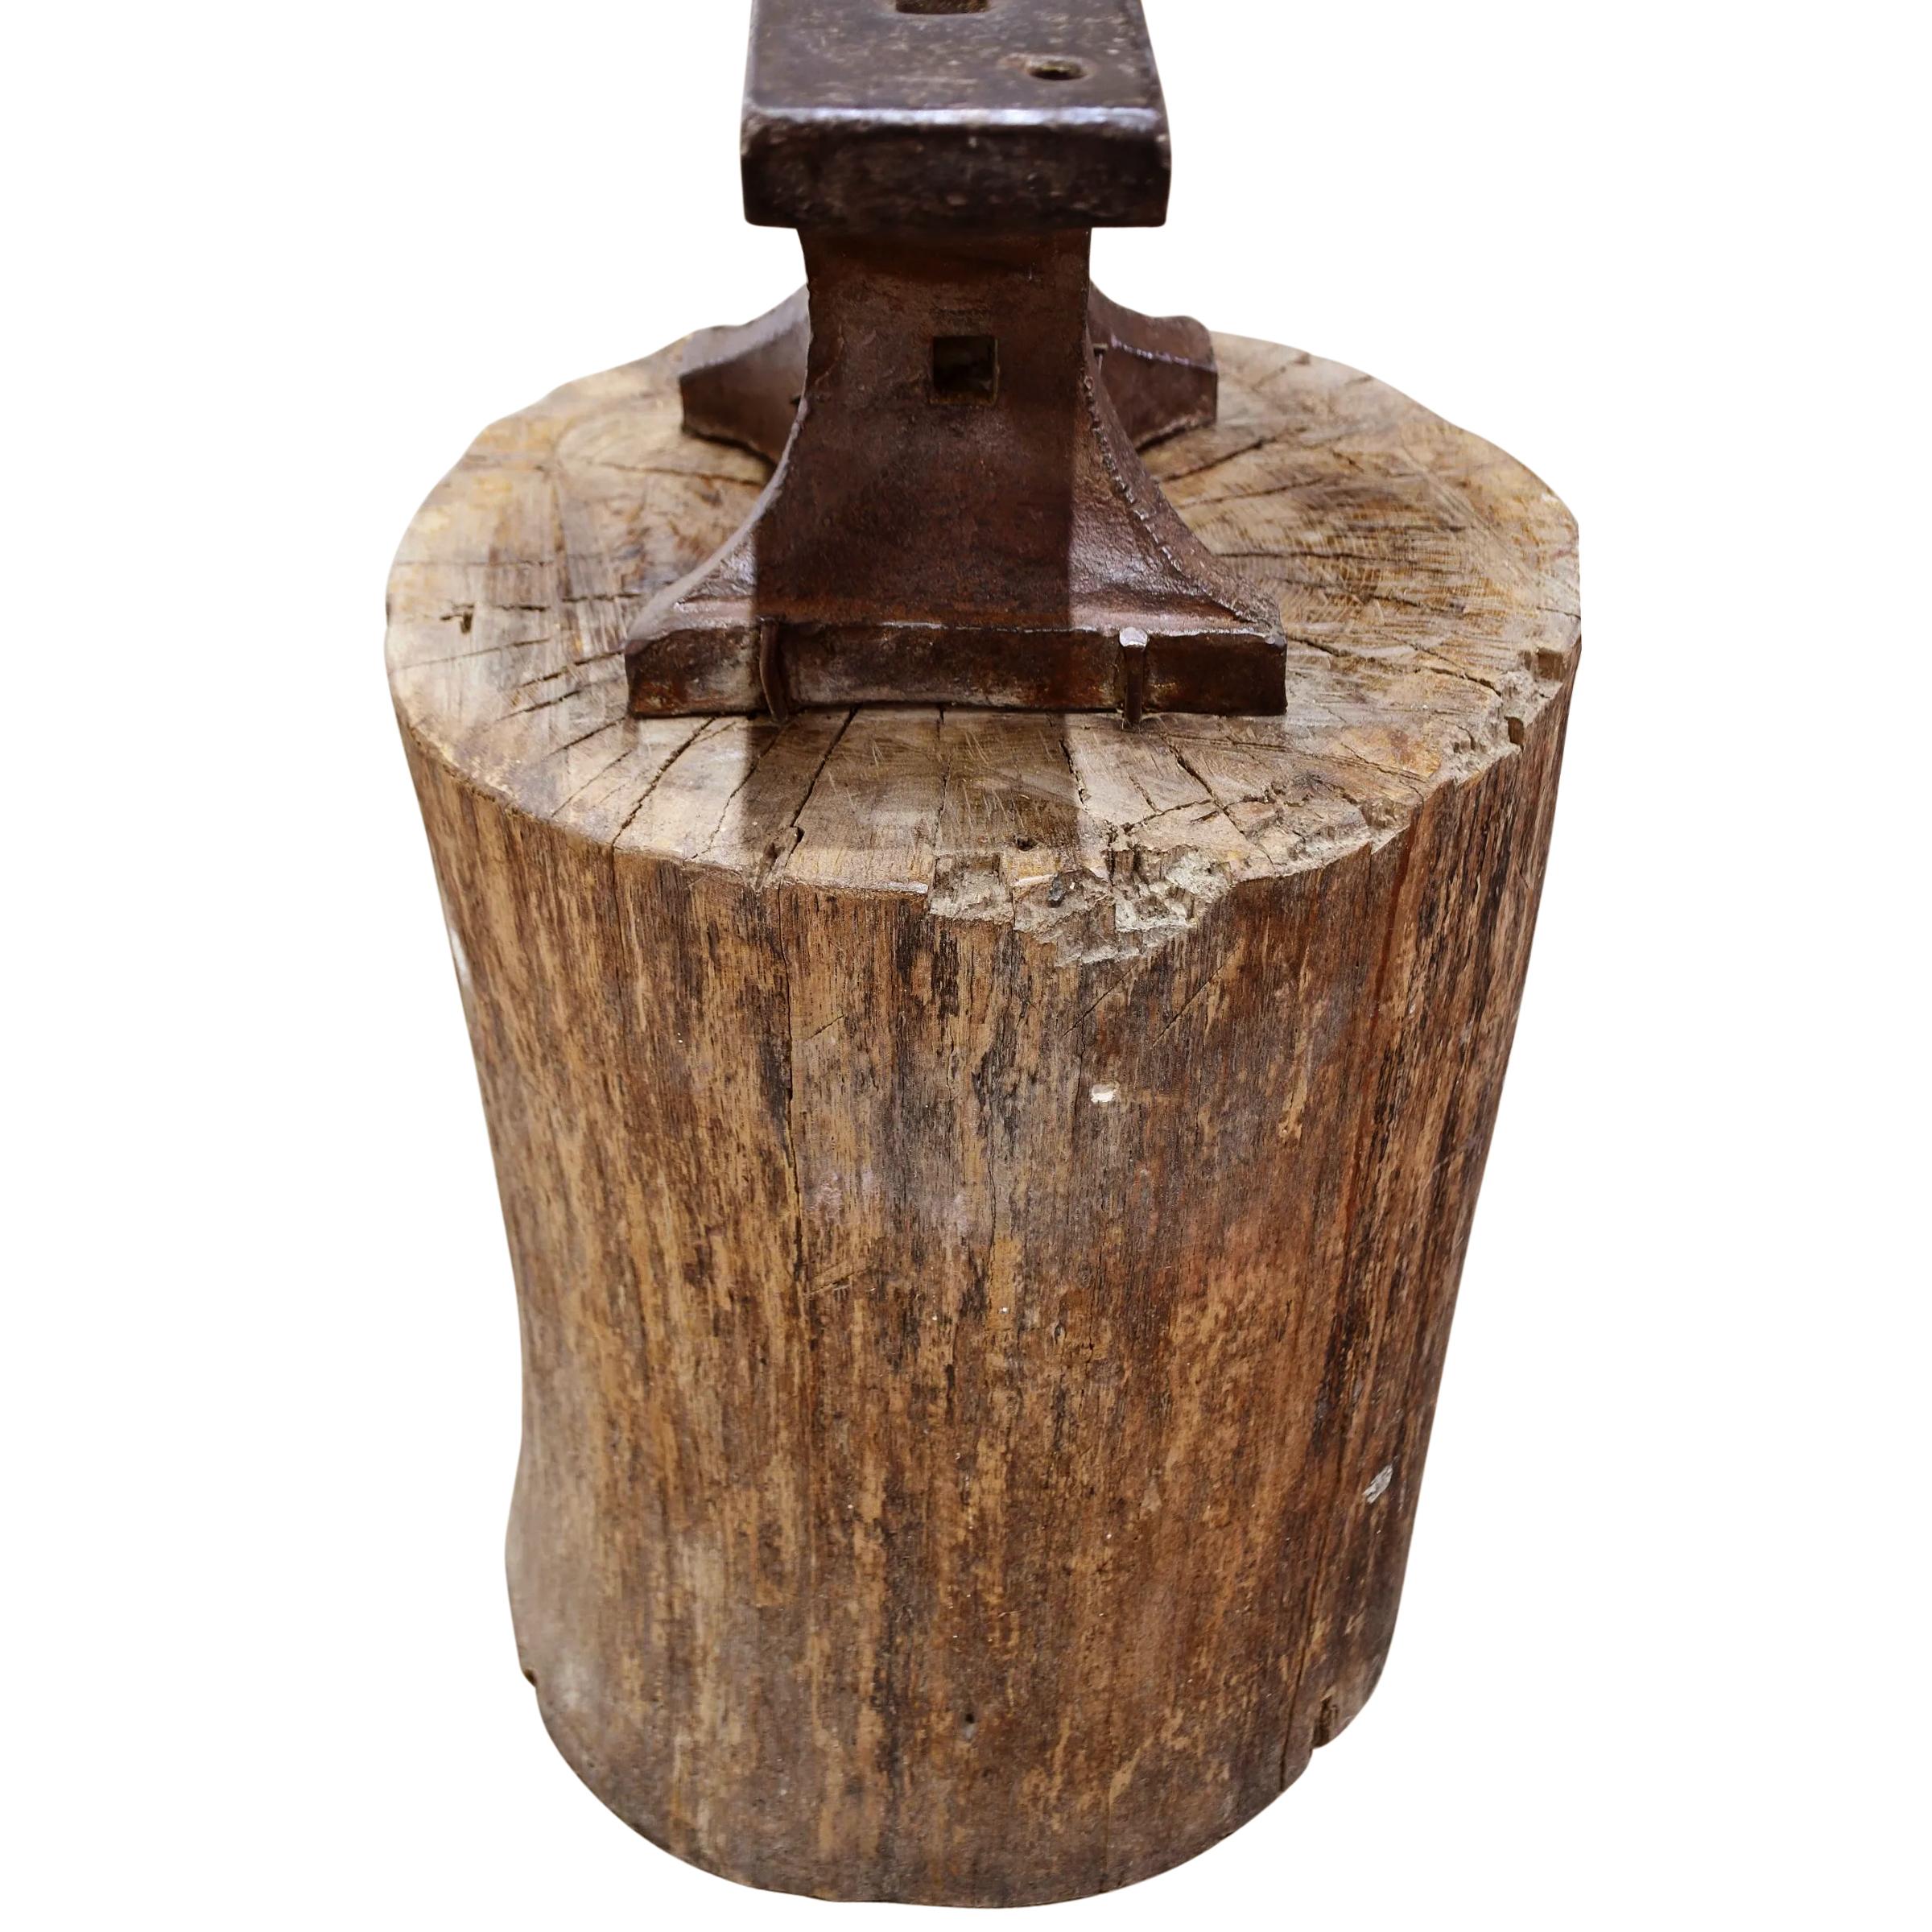 Rustic 19th Century American Blacksmith's Anvil on Tree Stump Pedestal For Sale